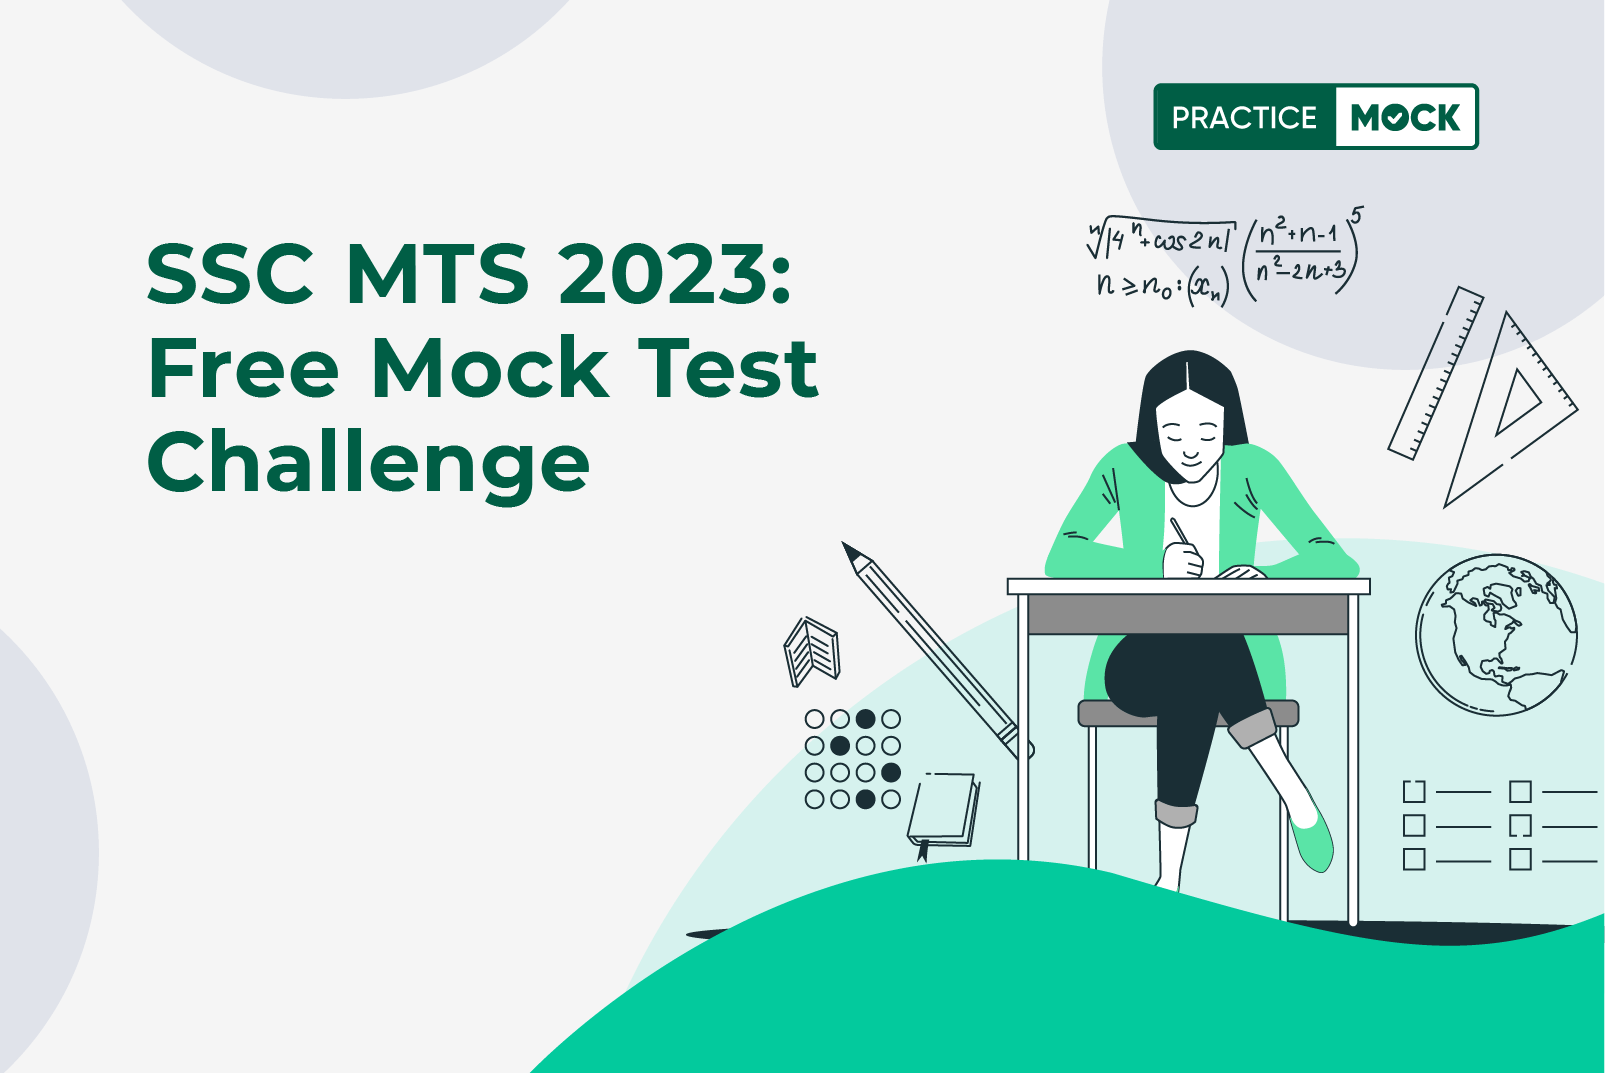 SSC MTS 2023: Free Mock Test Challenge